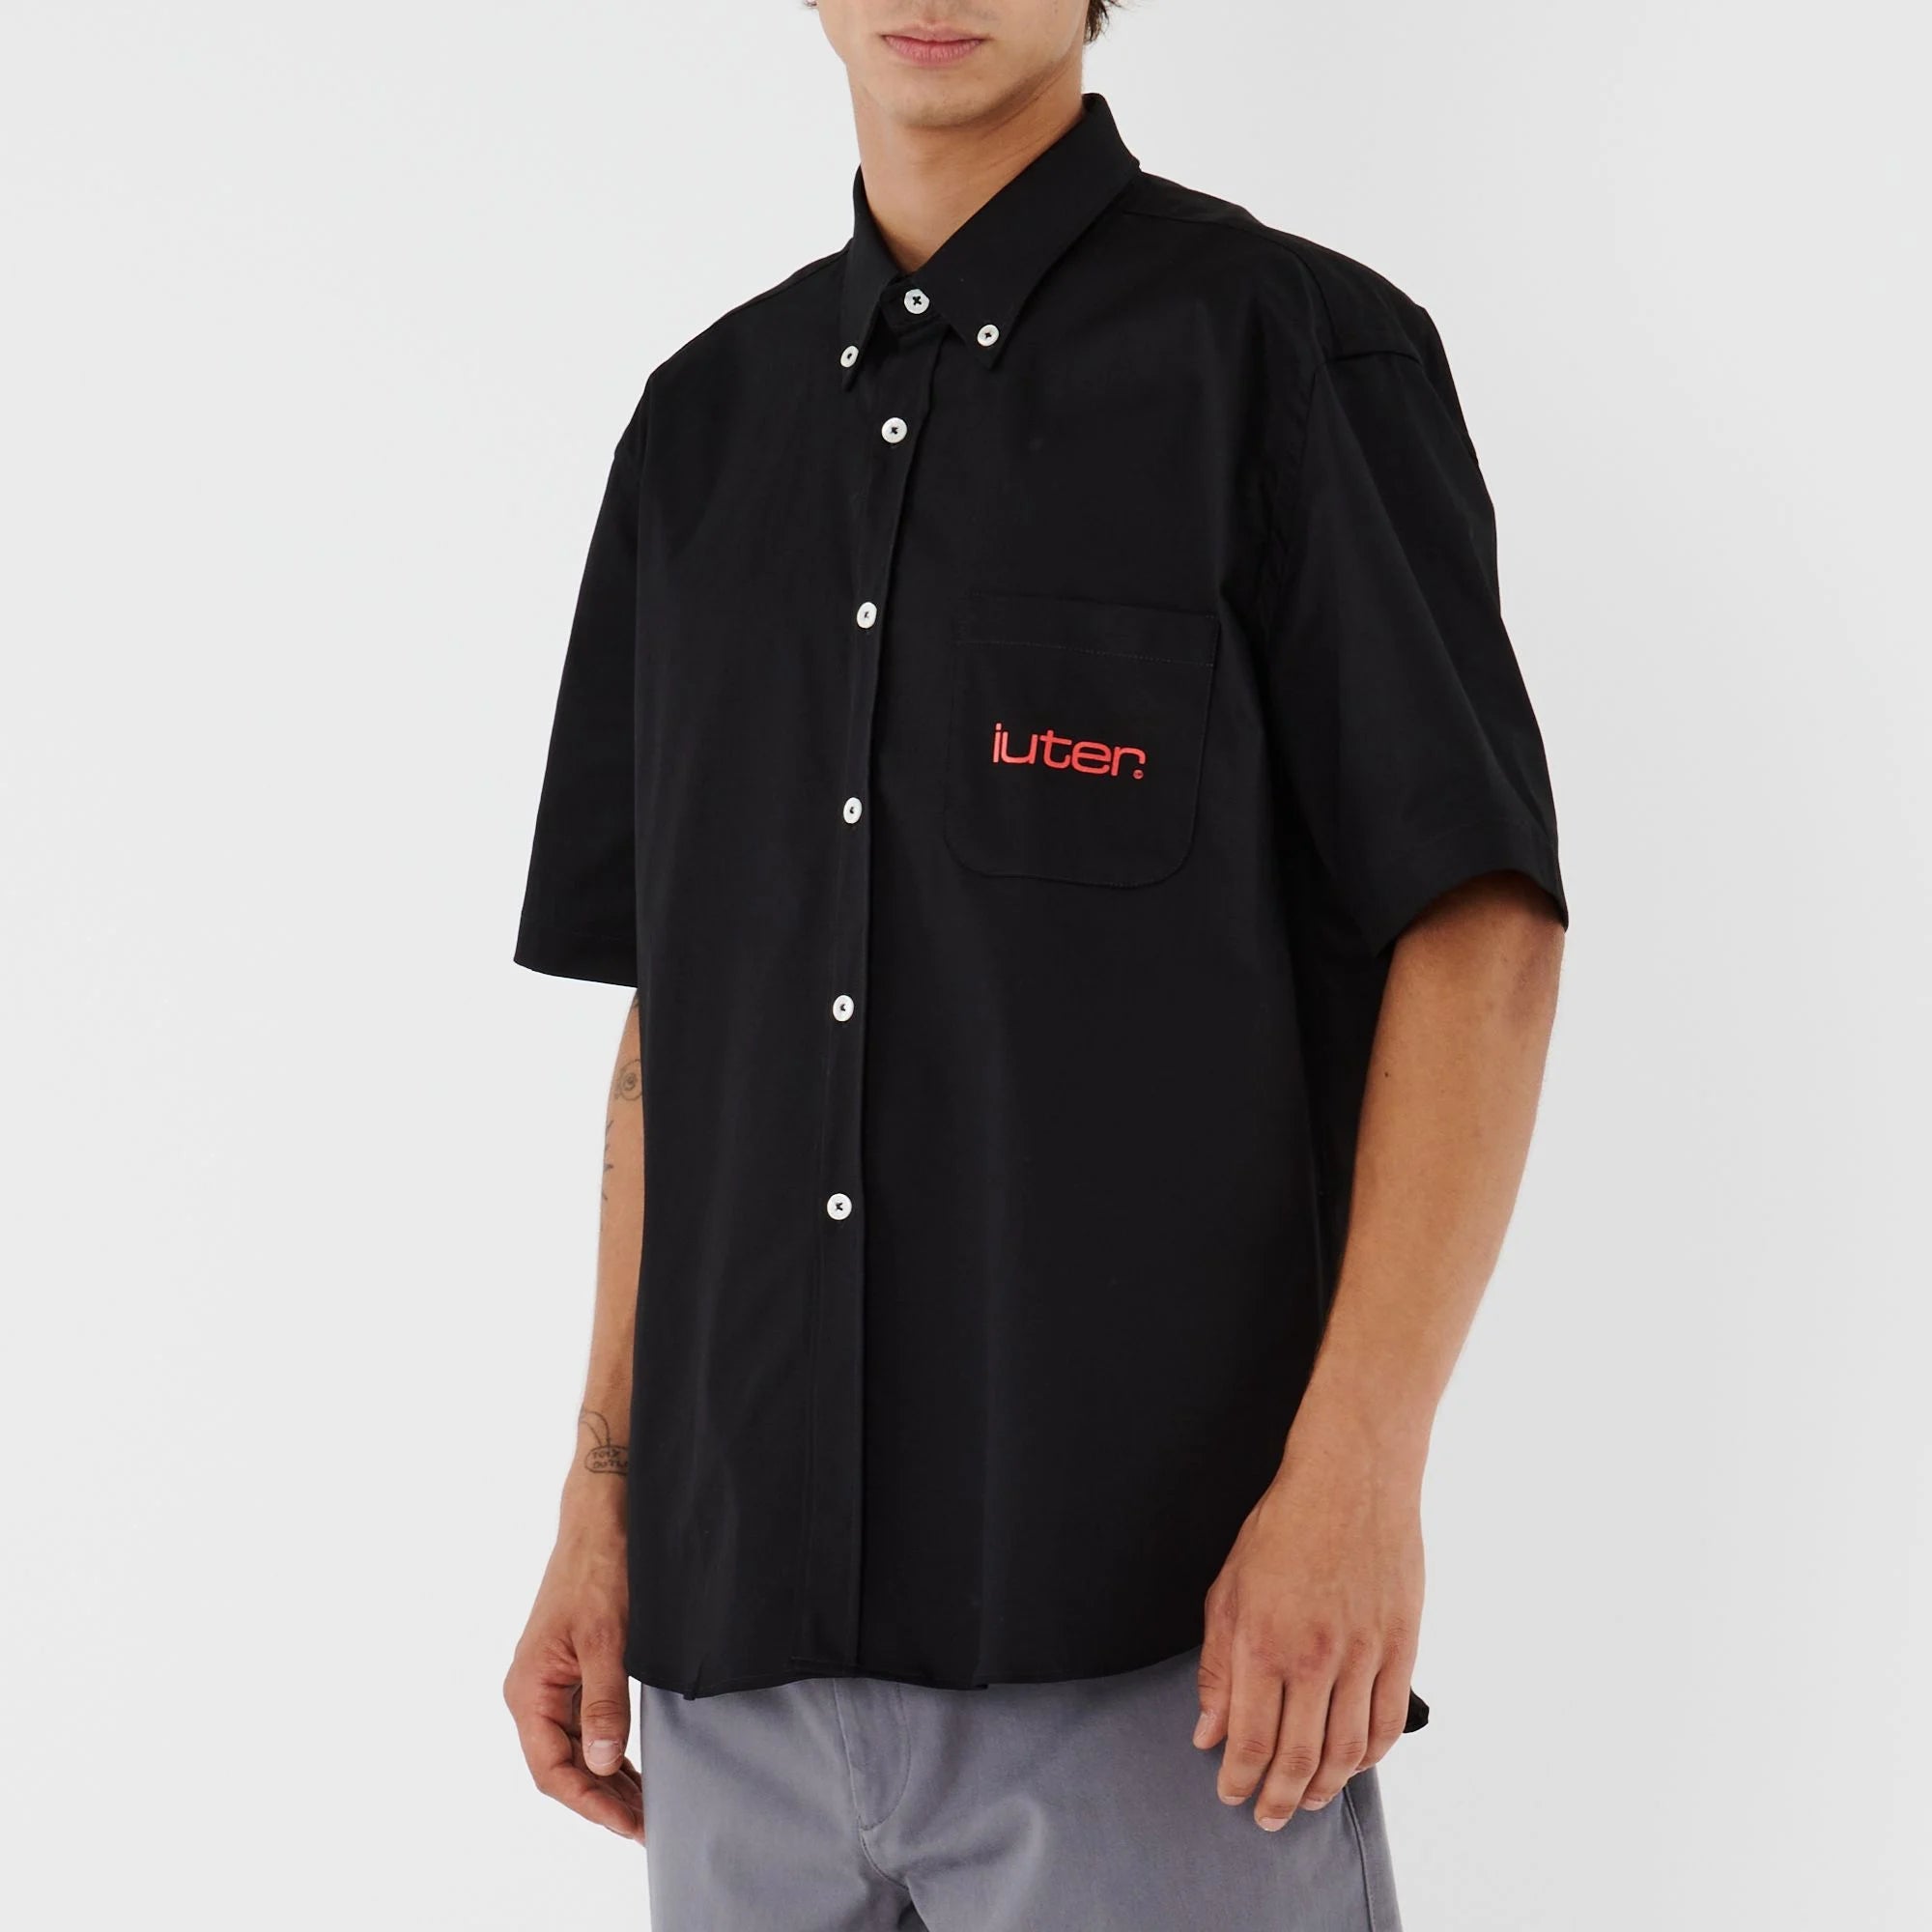 Grid S/S Shirt (Black)